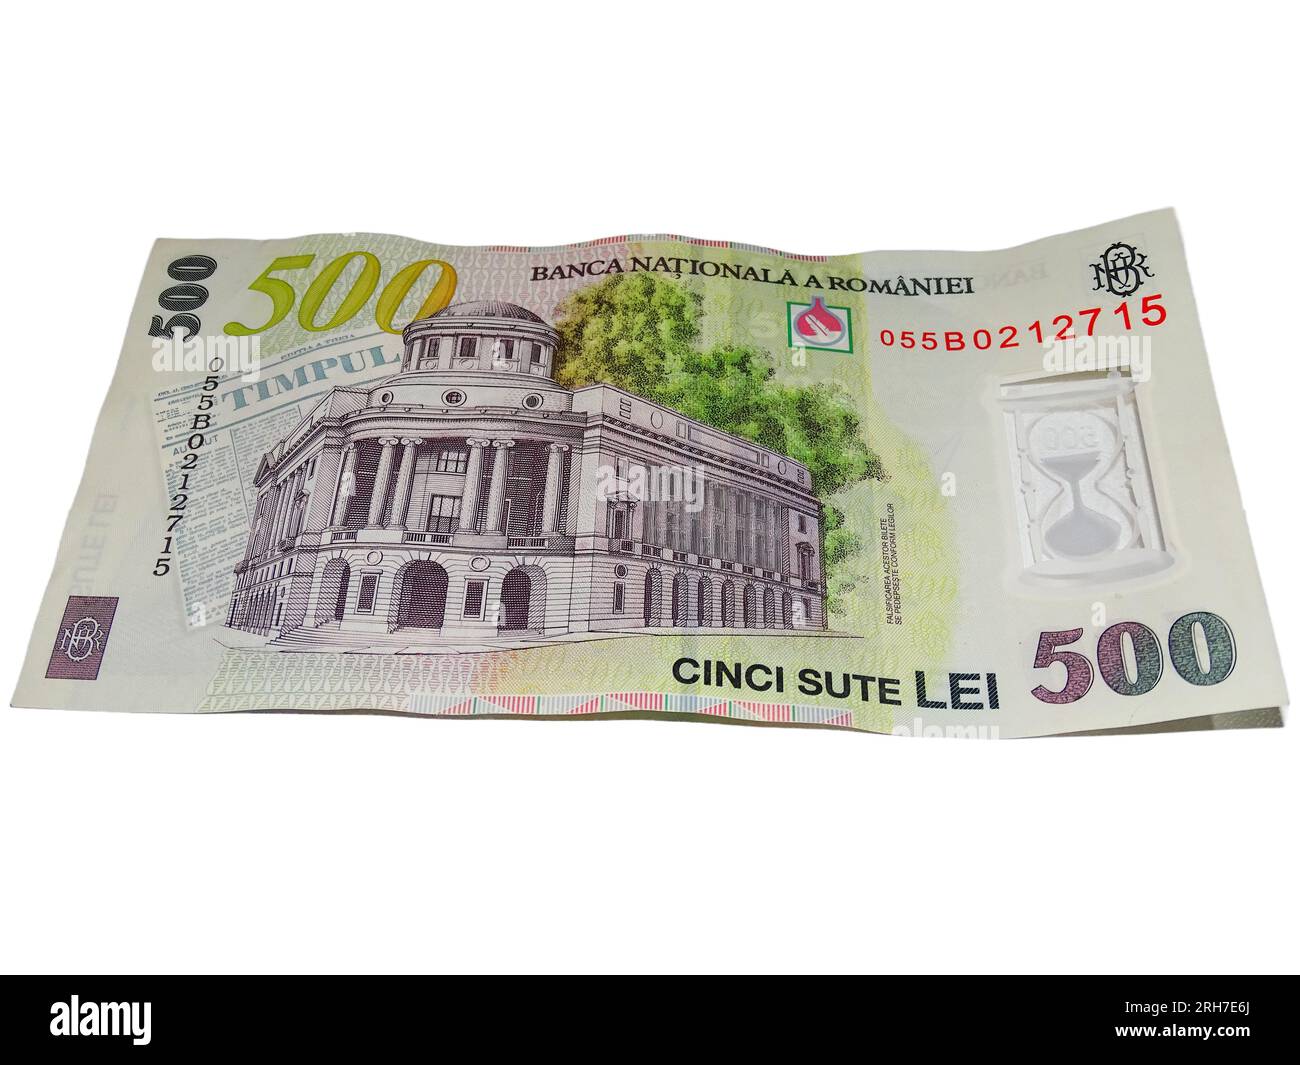 Banknote of 500 lei. Romanian money. Money from Romania Stock Photo